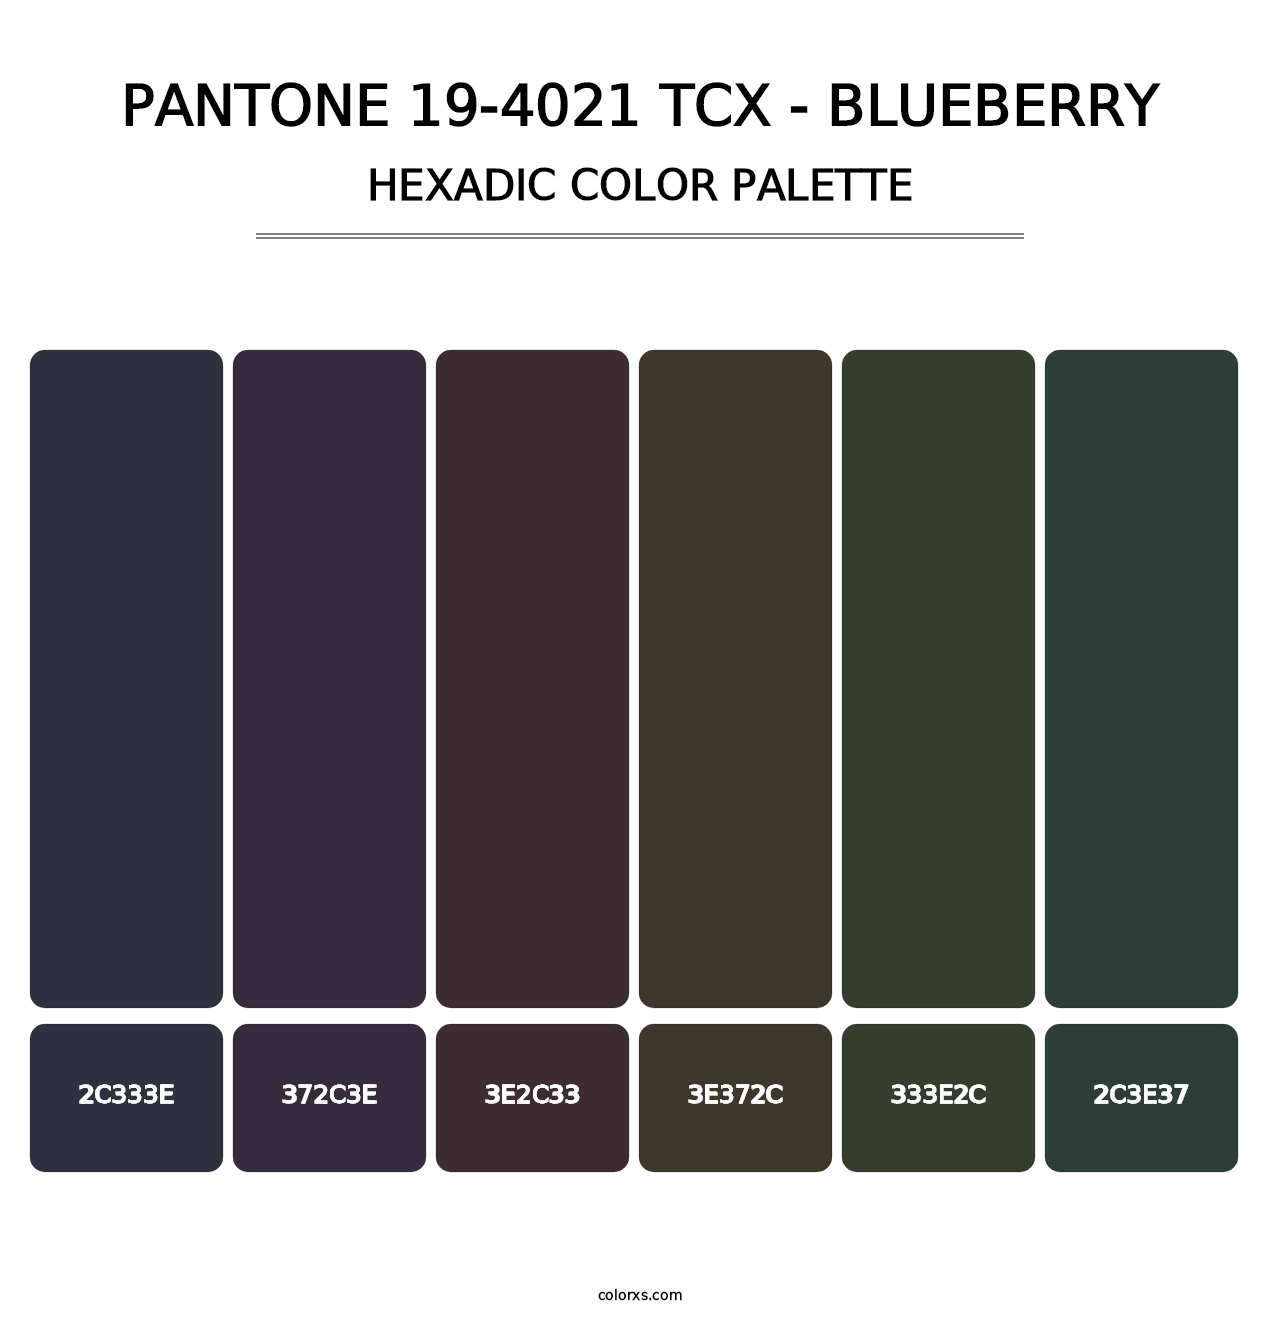 PANTONE 19-4021 TCX - Blueberry - Hexadic Color Palette